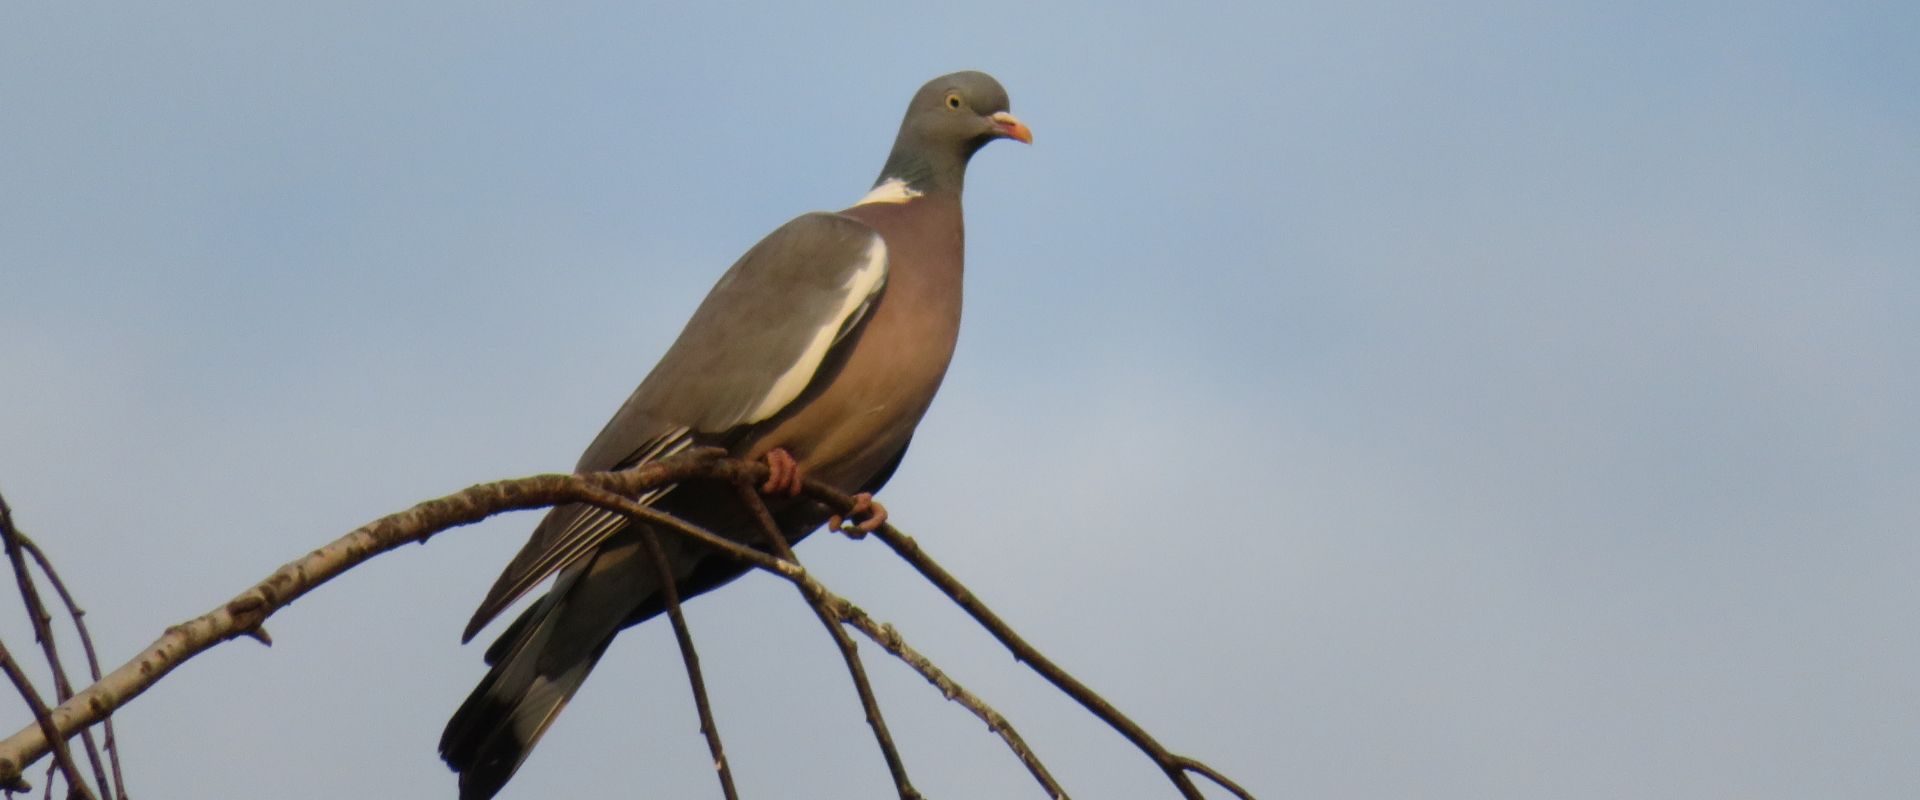 wood-pigeon-scotland